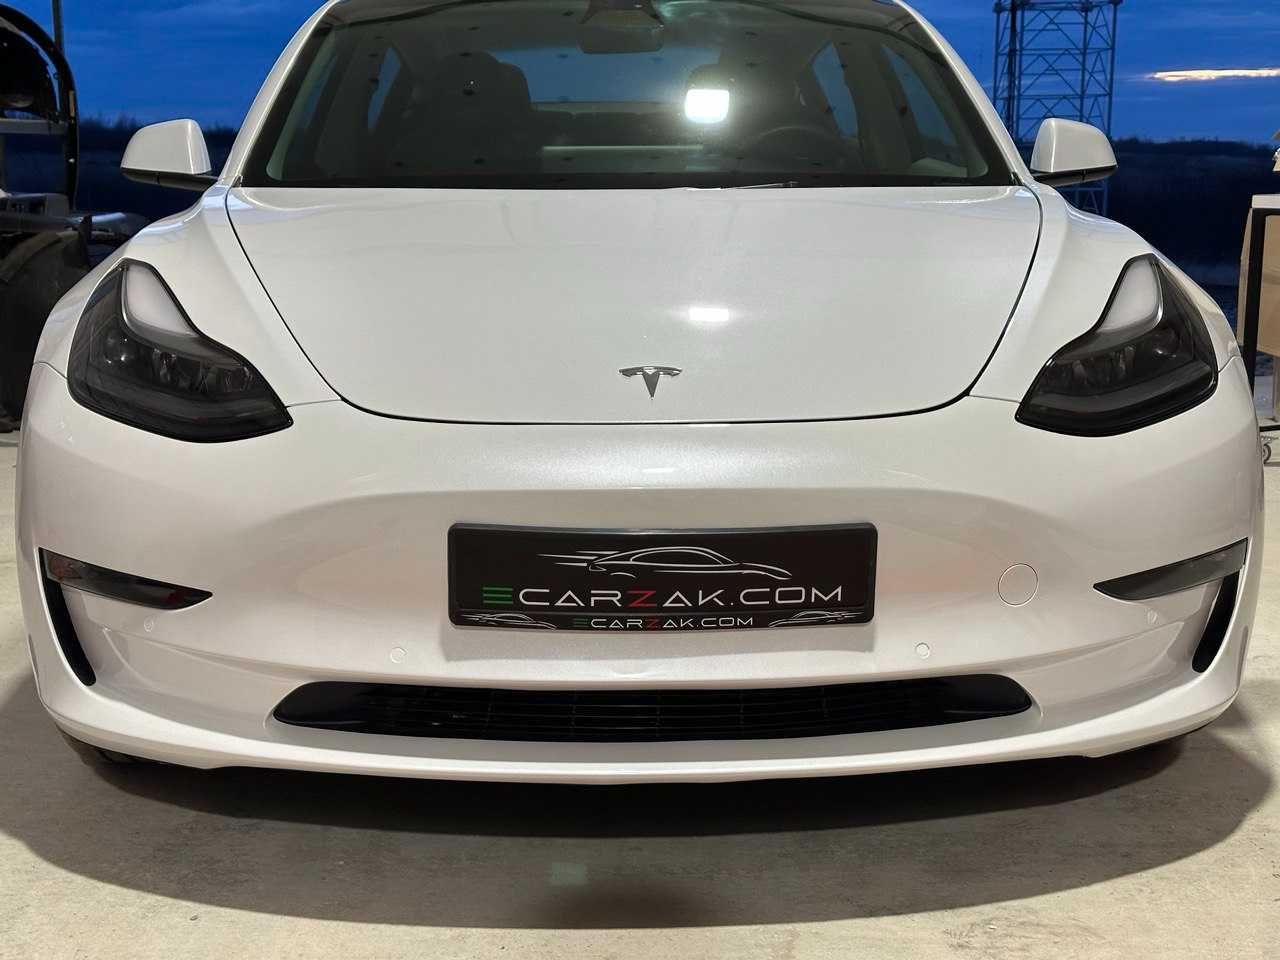 eCarZak service Tesla Гарантії та бонуси